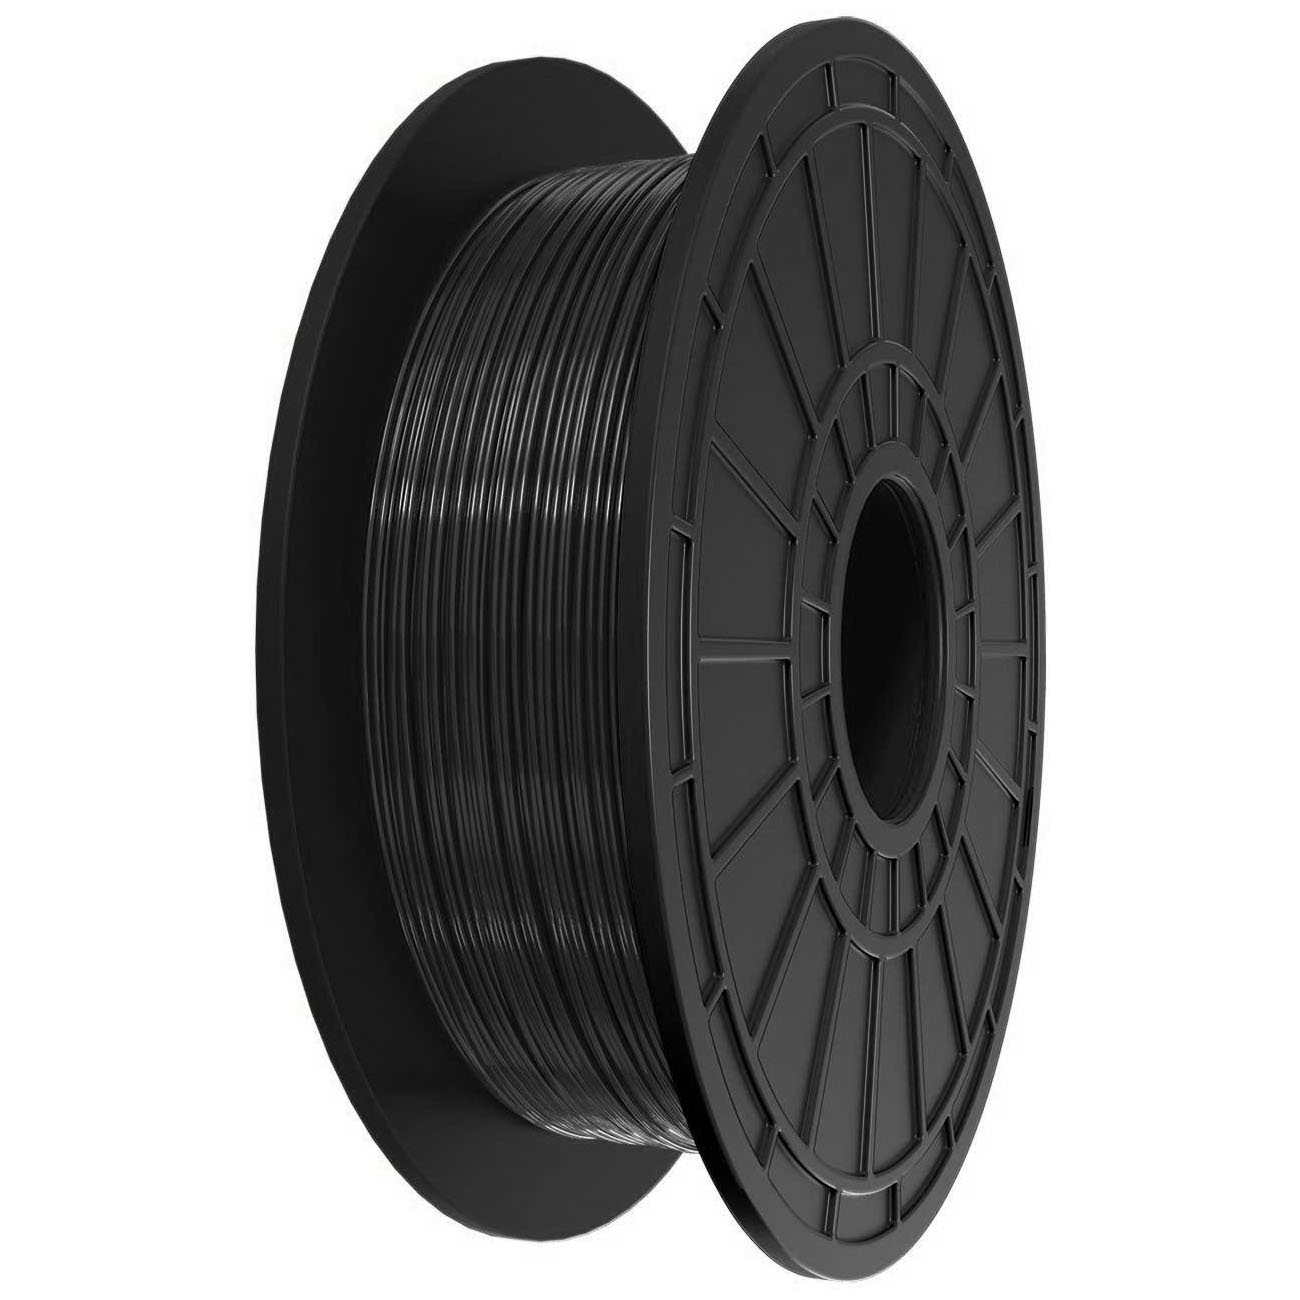 Black ABS 0.5kg Spool 1.75mm Filament (2pk)- Click to Enlarge